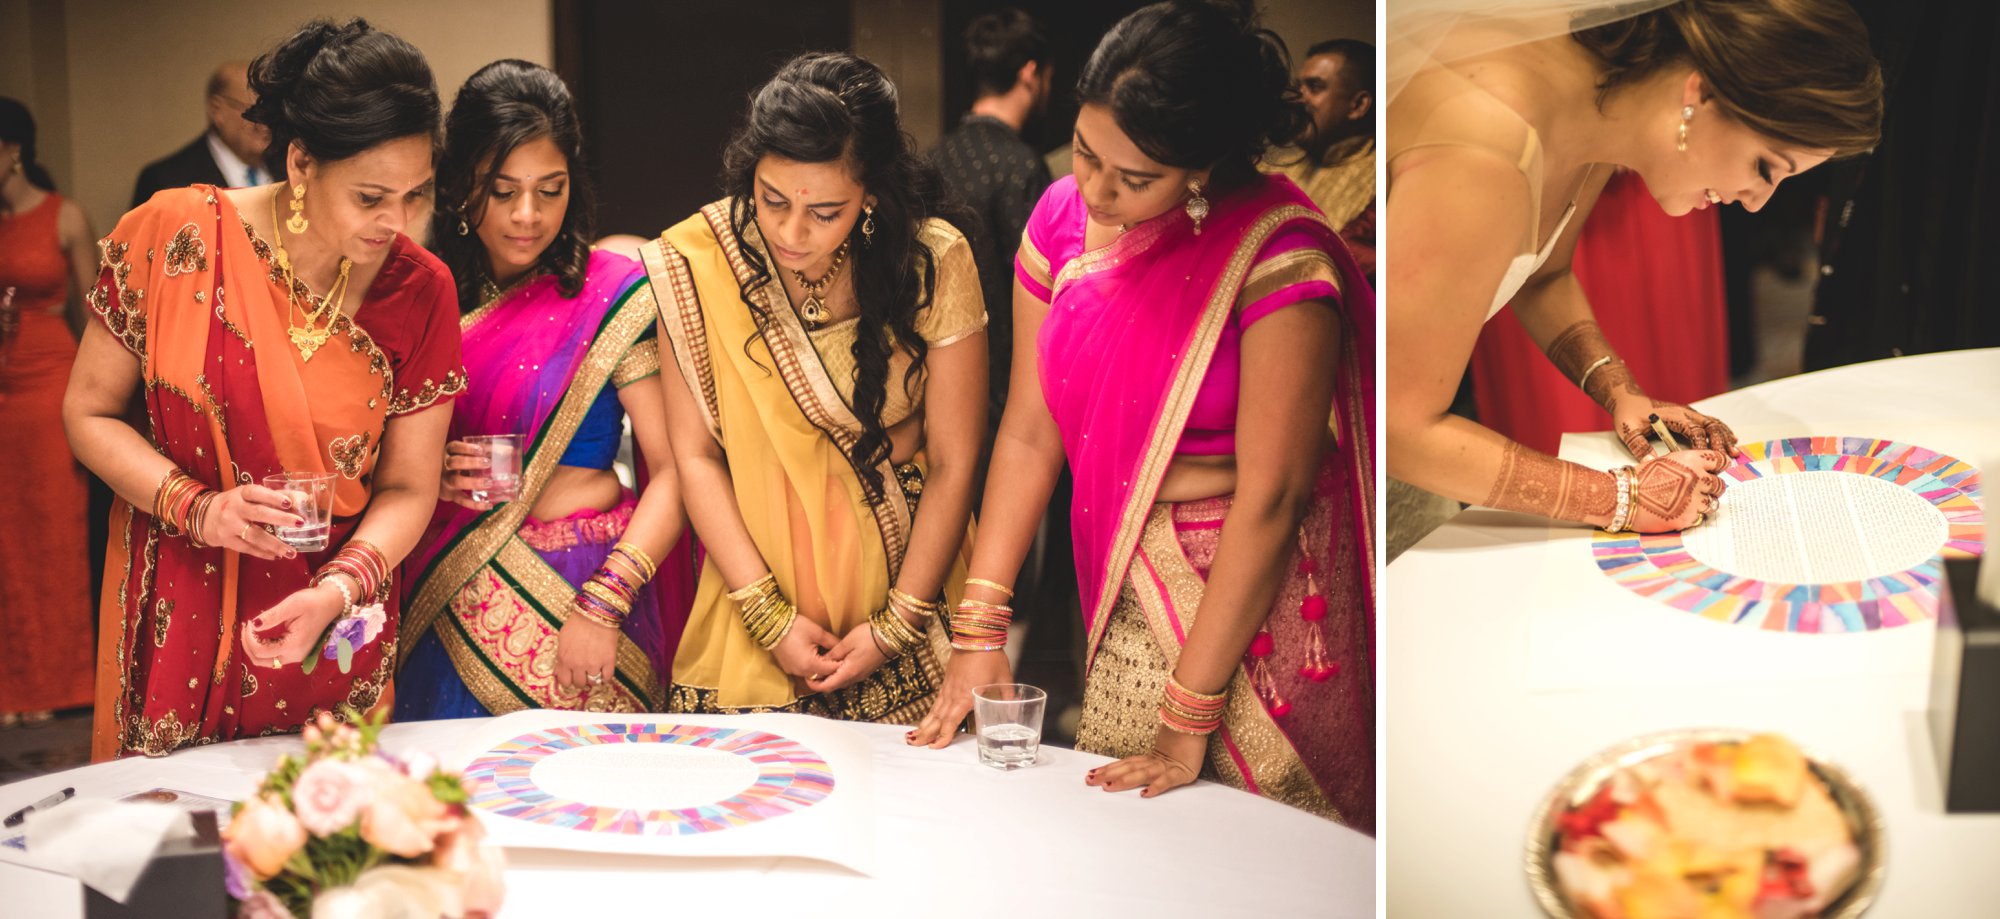 Washington DC colorful Indian wedding with a feminist bride. Ketubah signing.